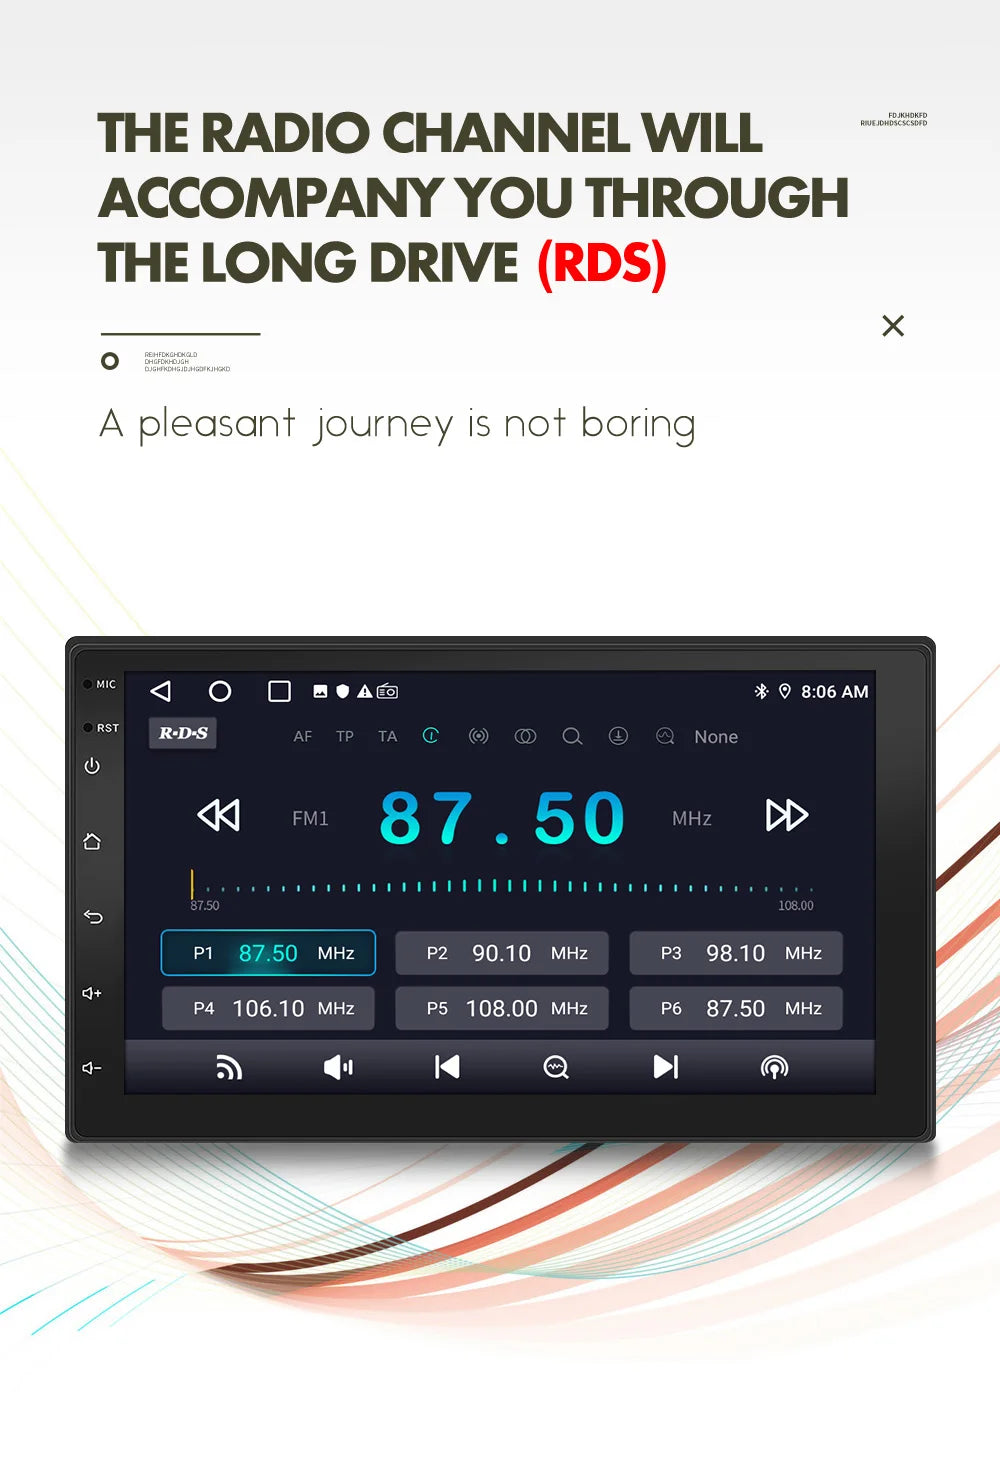 ESSGOO Car Radio Wireless Carplay Android Auto 2 Din 7"/9" GPS Navigator MP5 Player Glass Screen  Wi-Fi FM BT Car Stereo